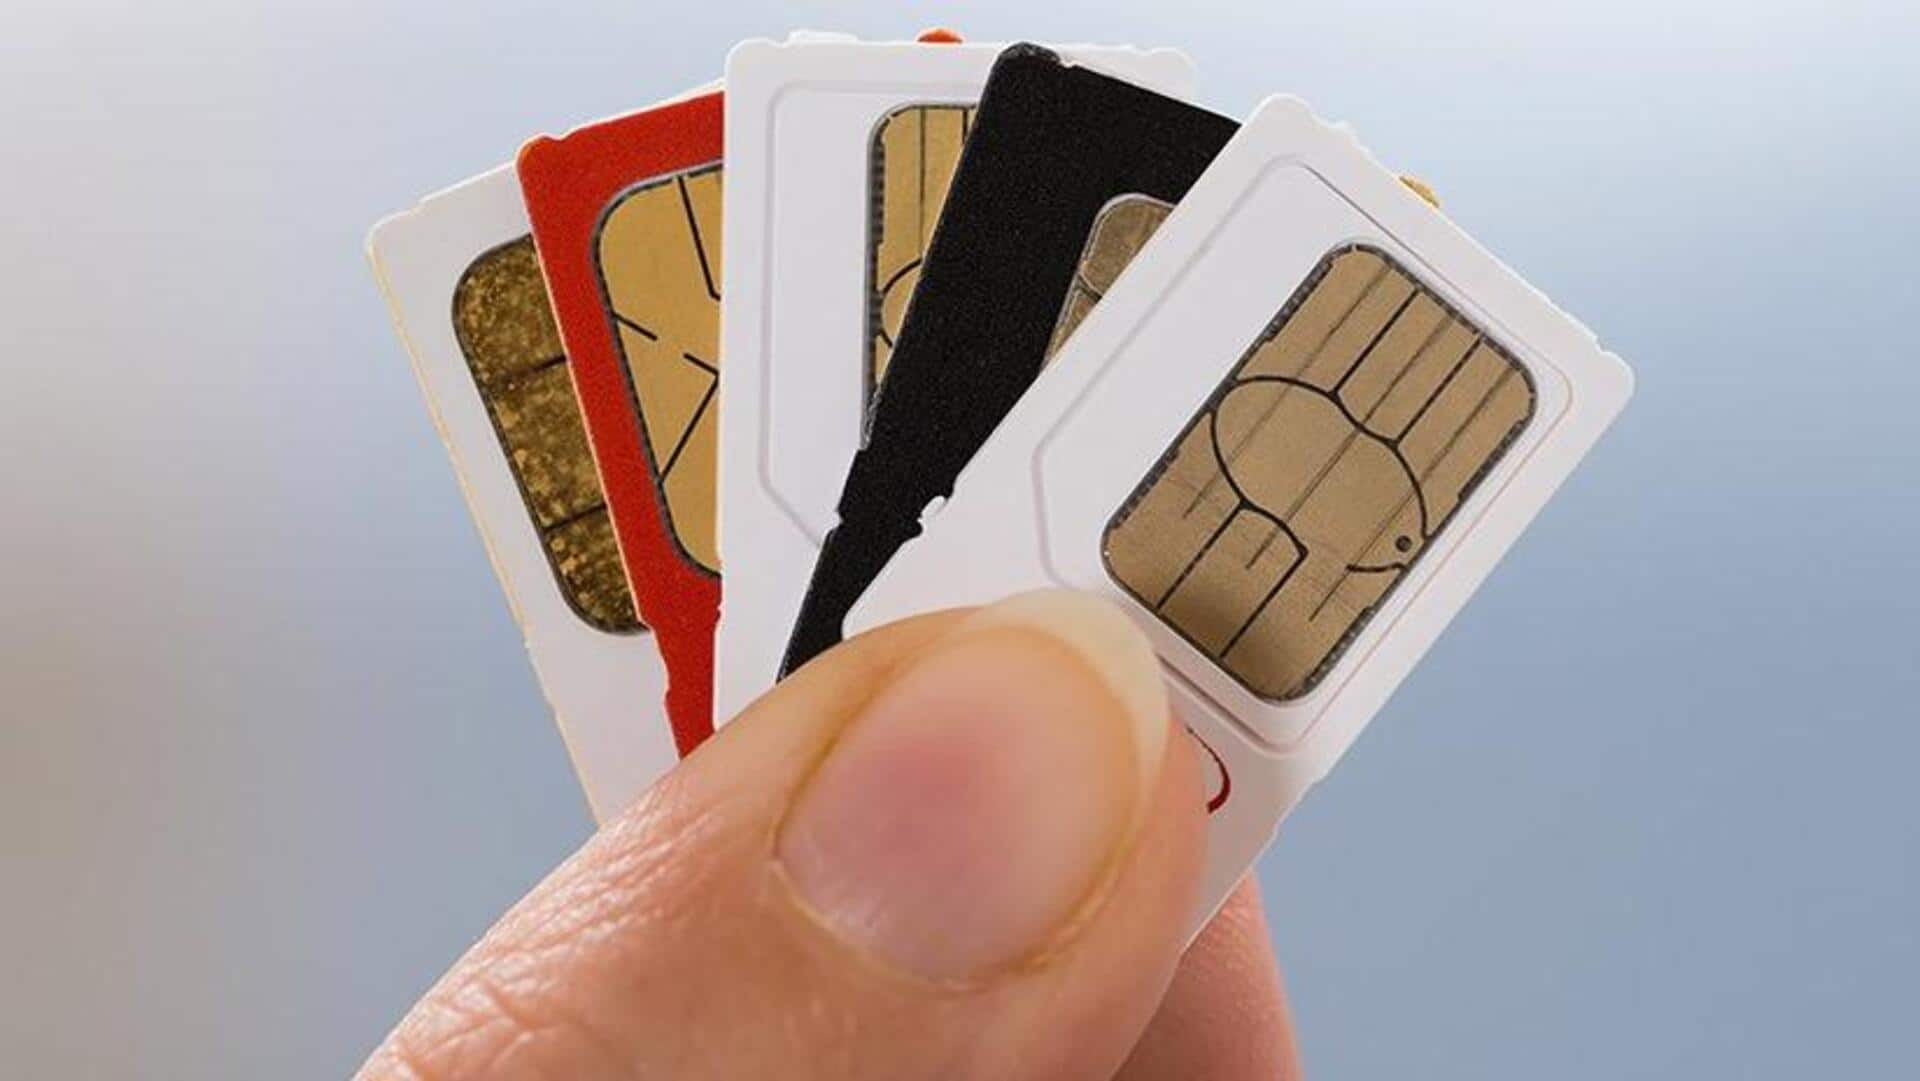 Telecom Bill makes biometric ID compulsory for getting SIM cards